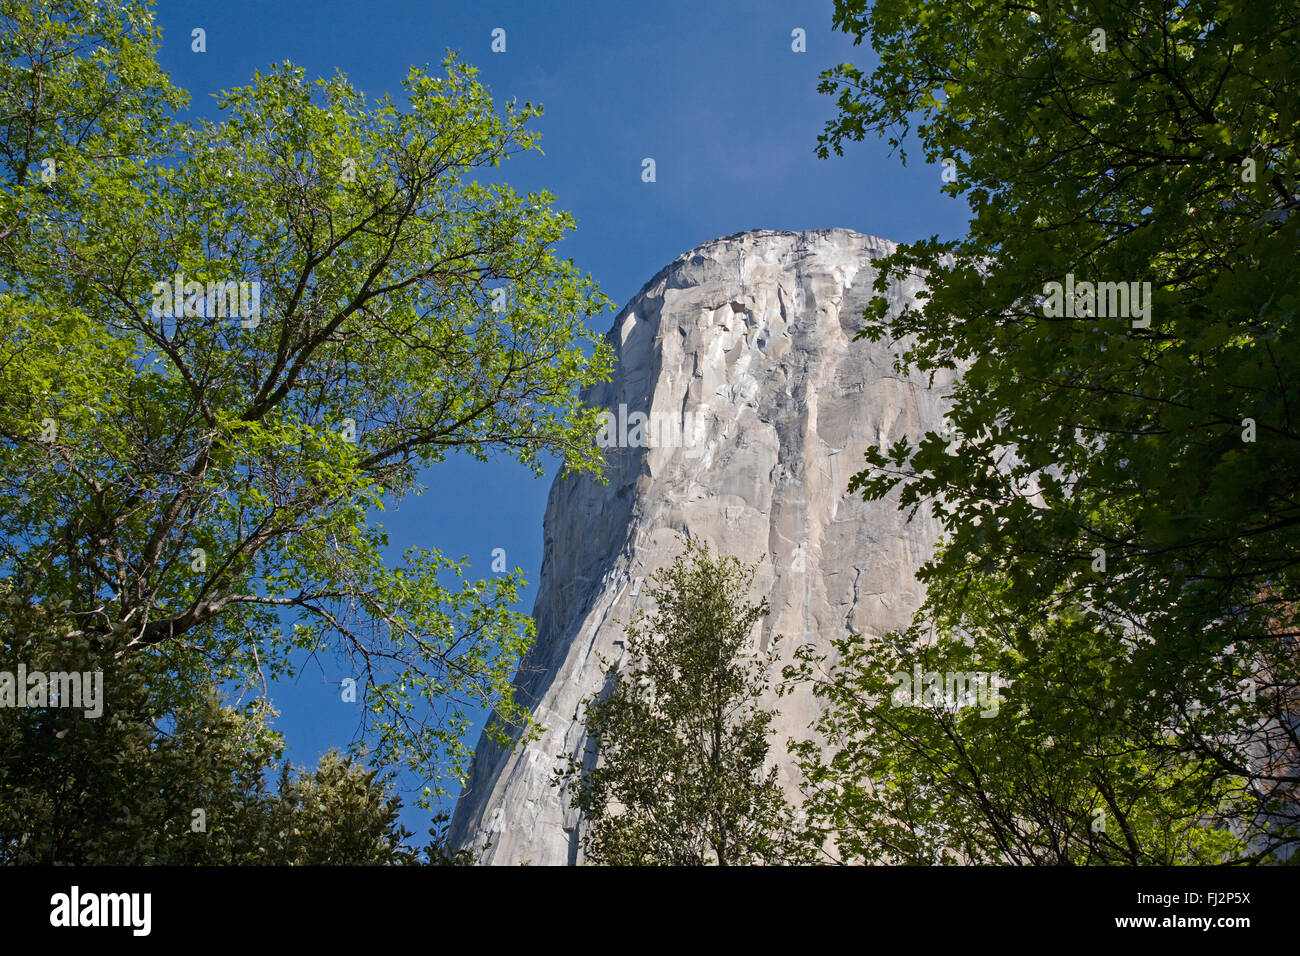 EL CAPITAN as seen through trees in the YOSEMITE VALLEY - YOSEMITE NATIONAL PARK, CALIFORNIA Stock Photo